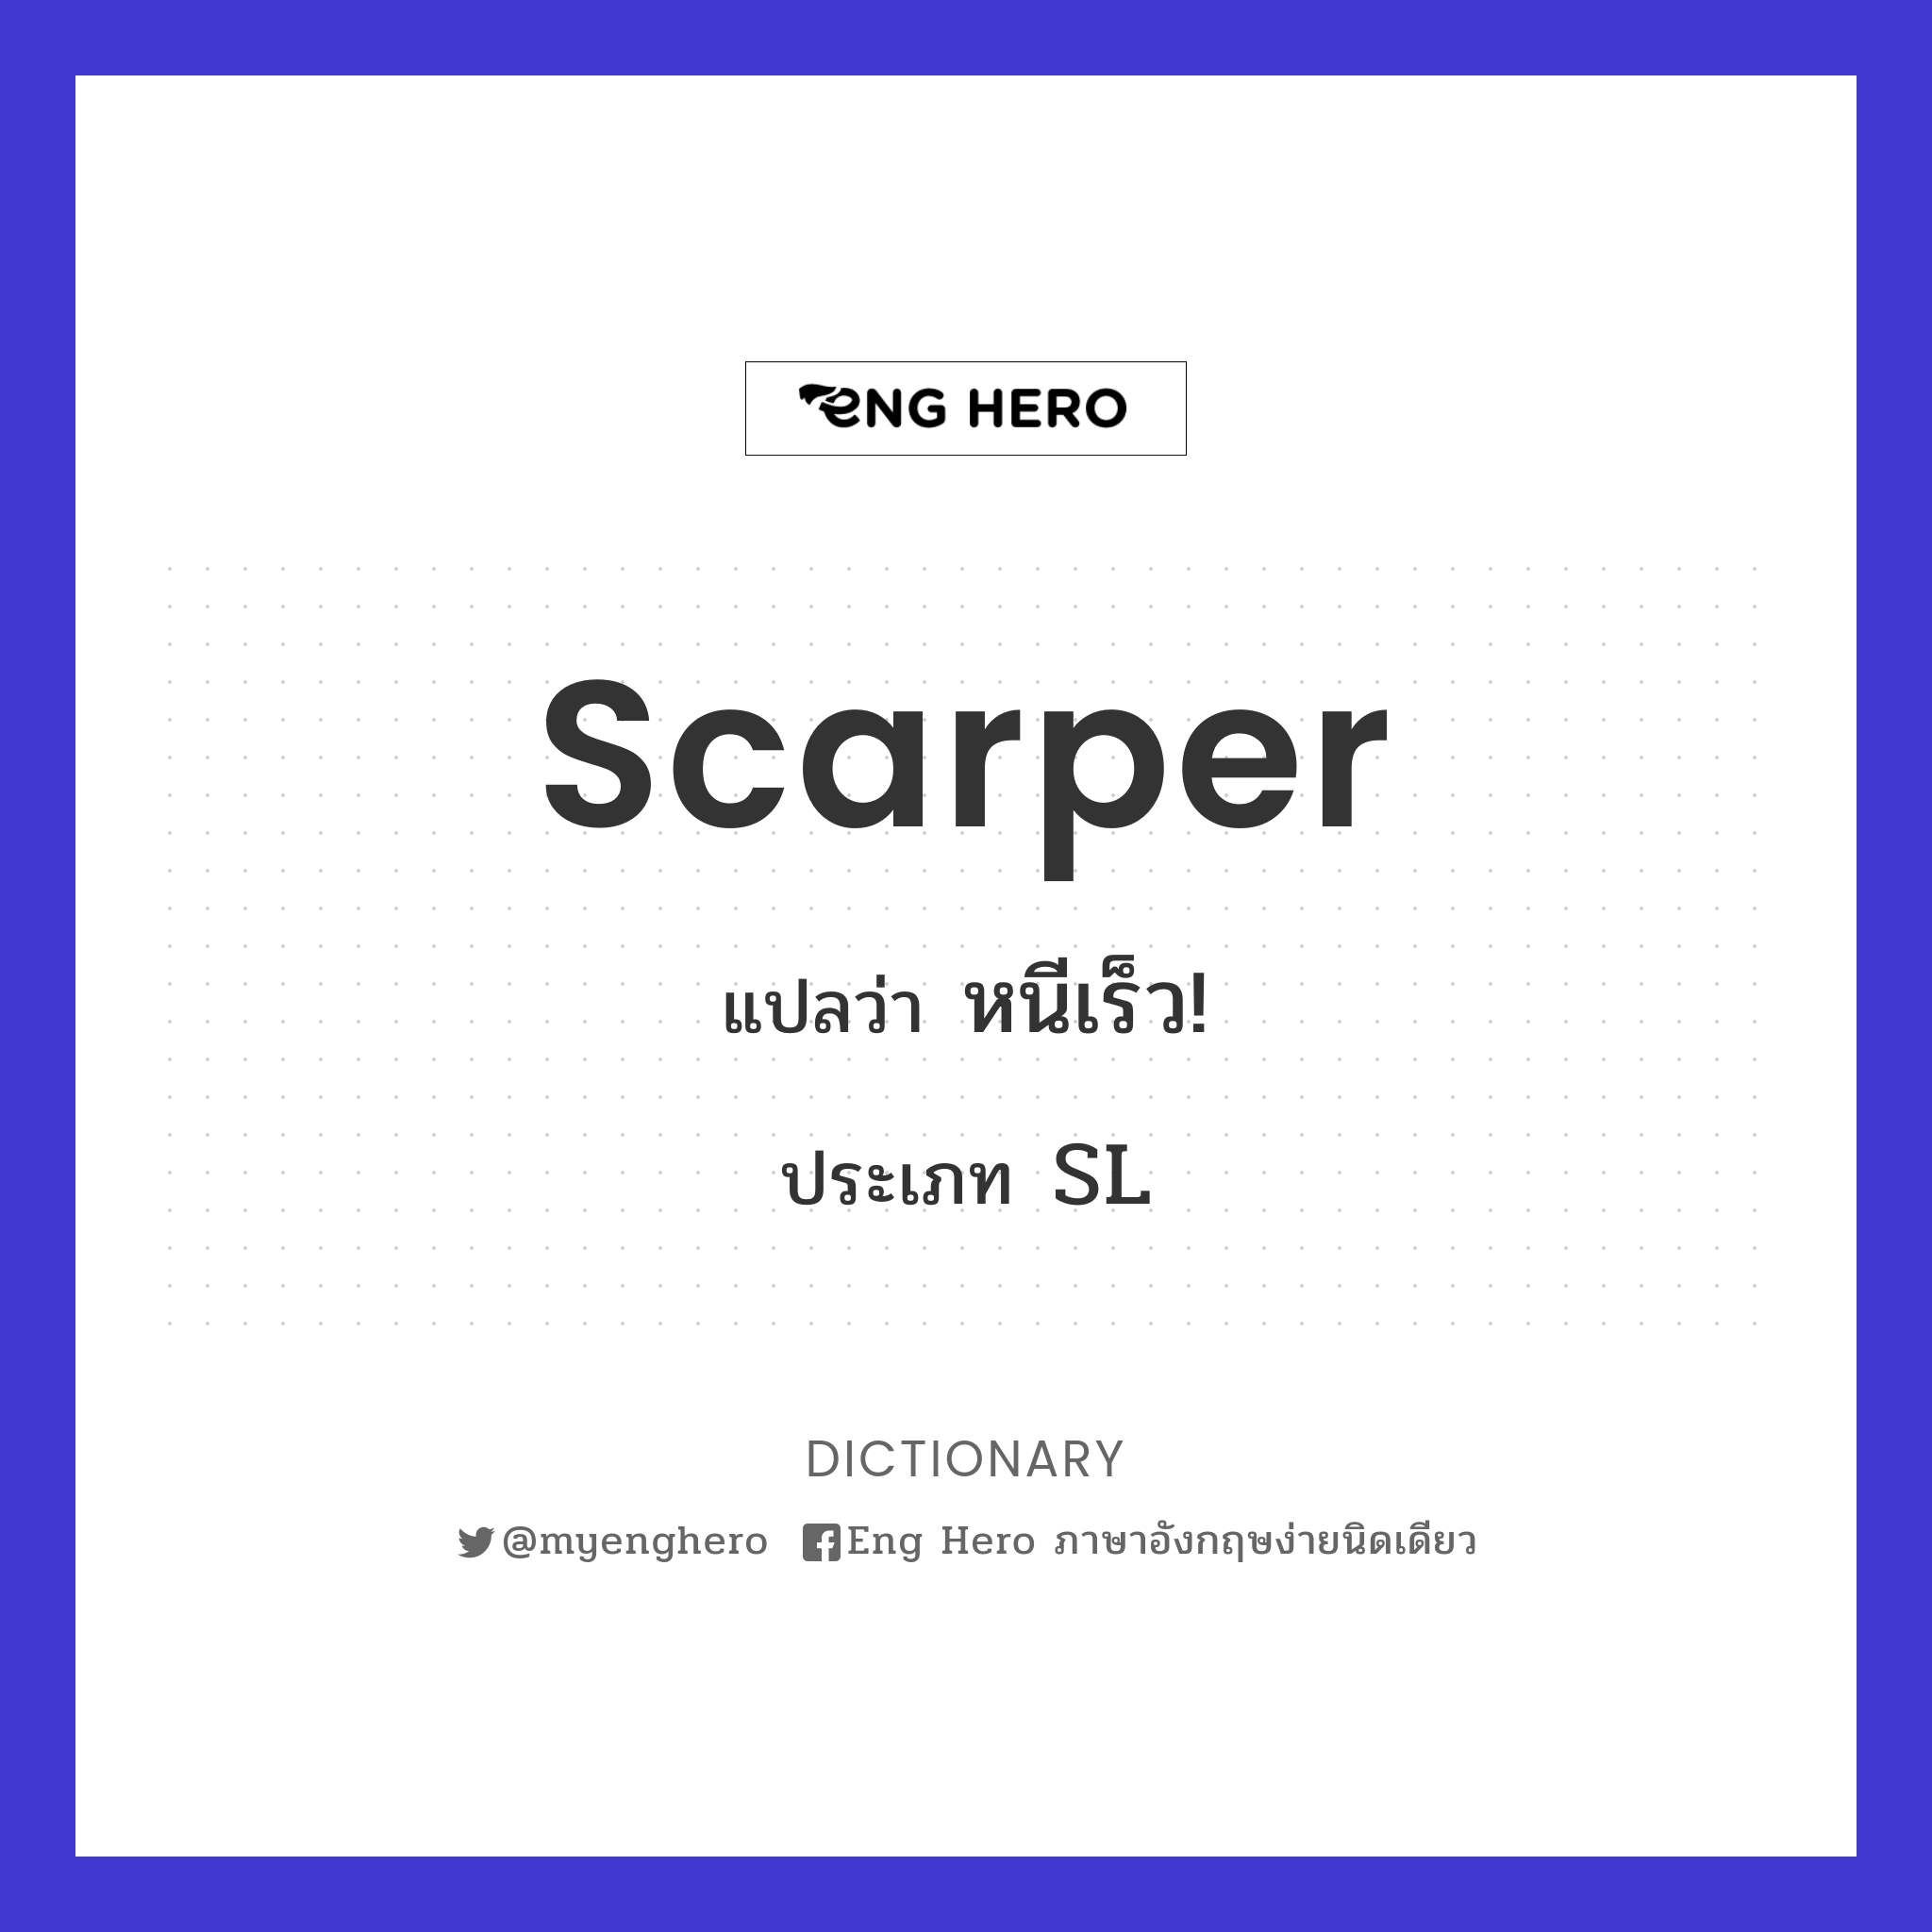 scarper